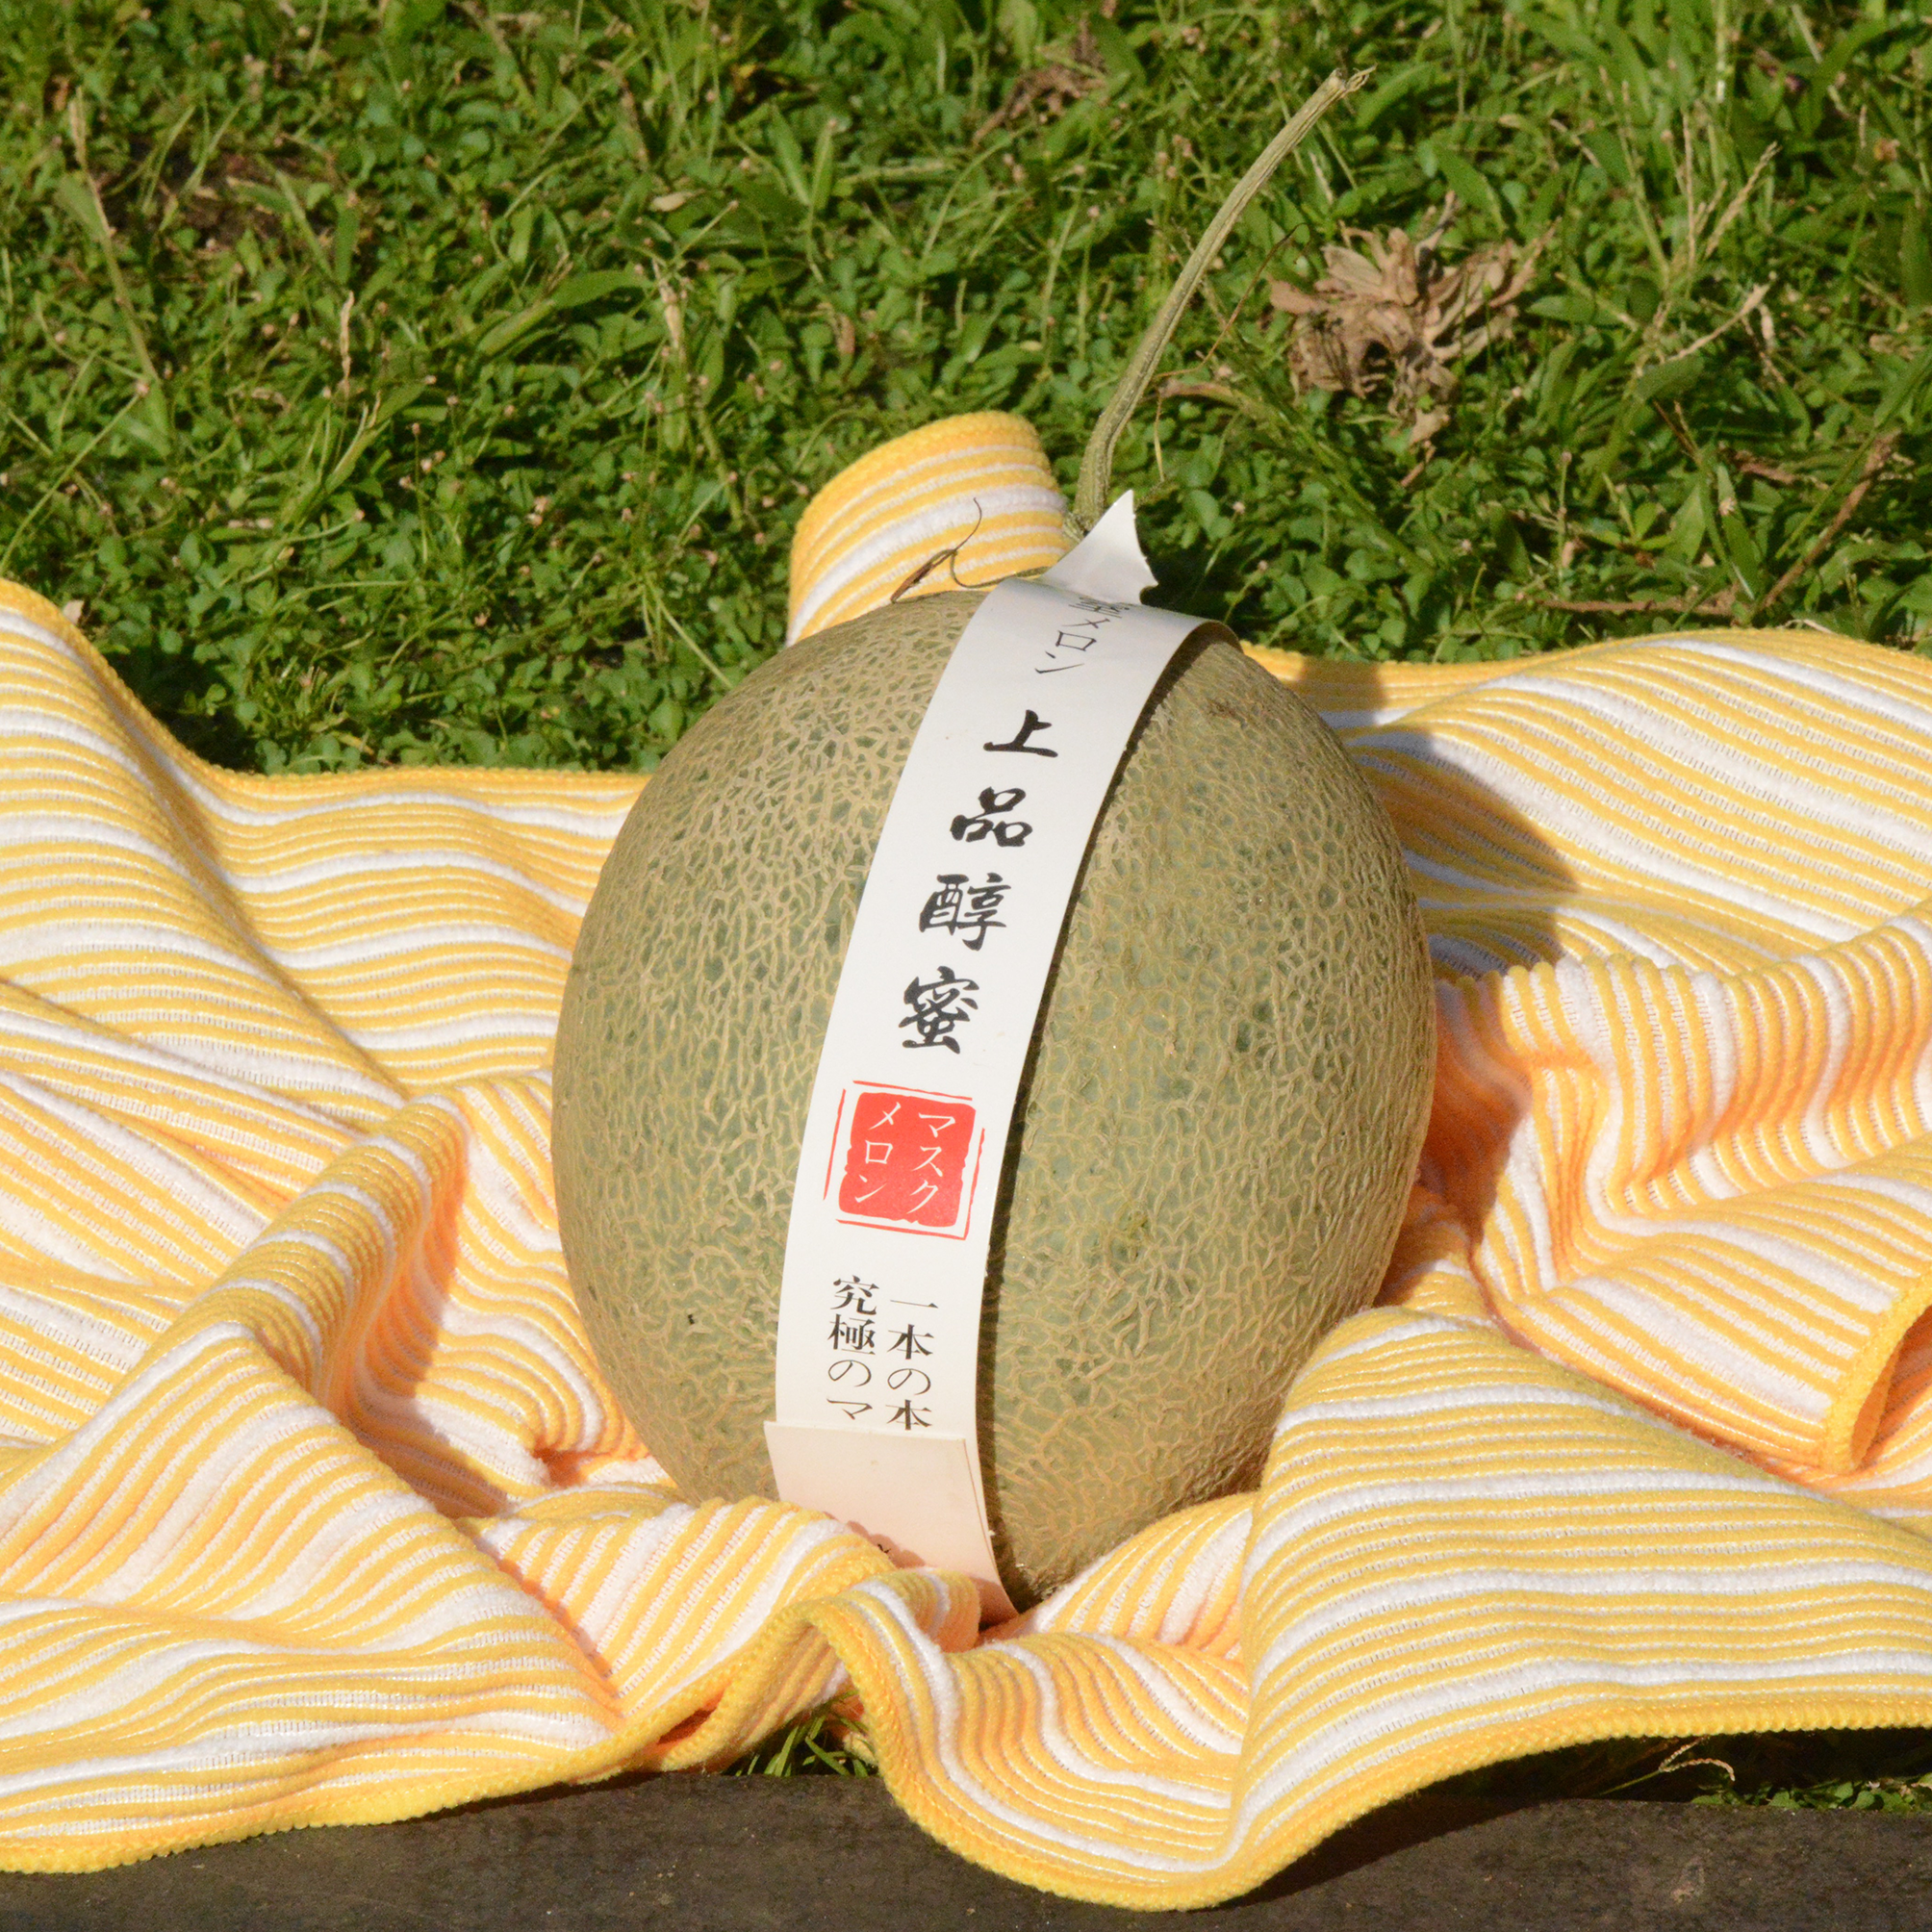 Japan Musk Melon